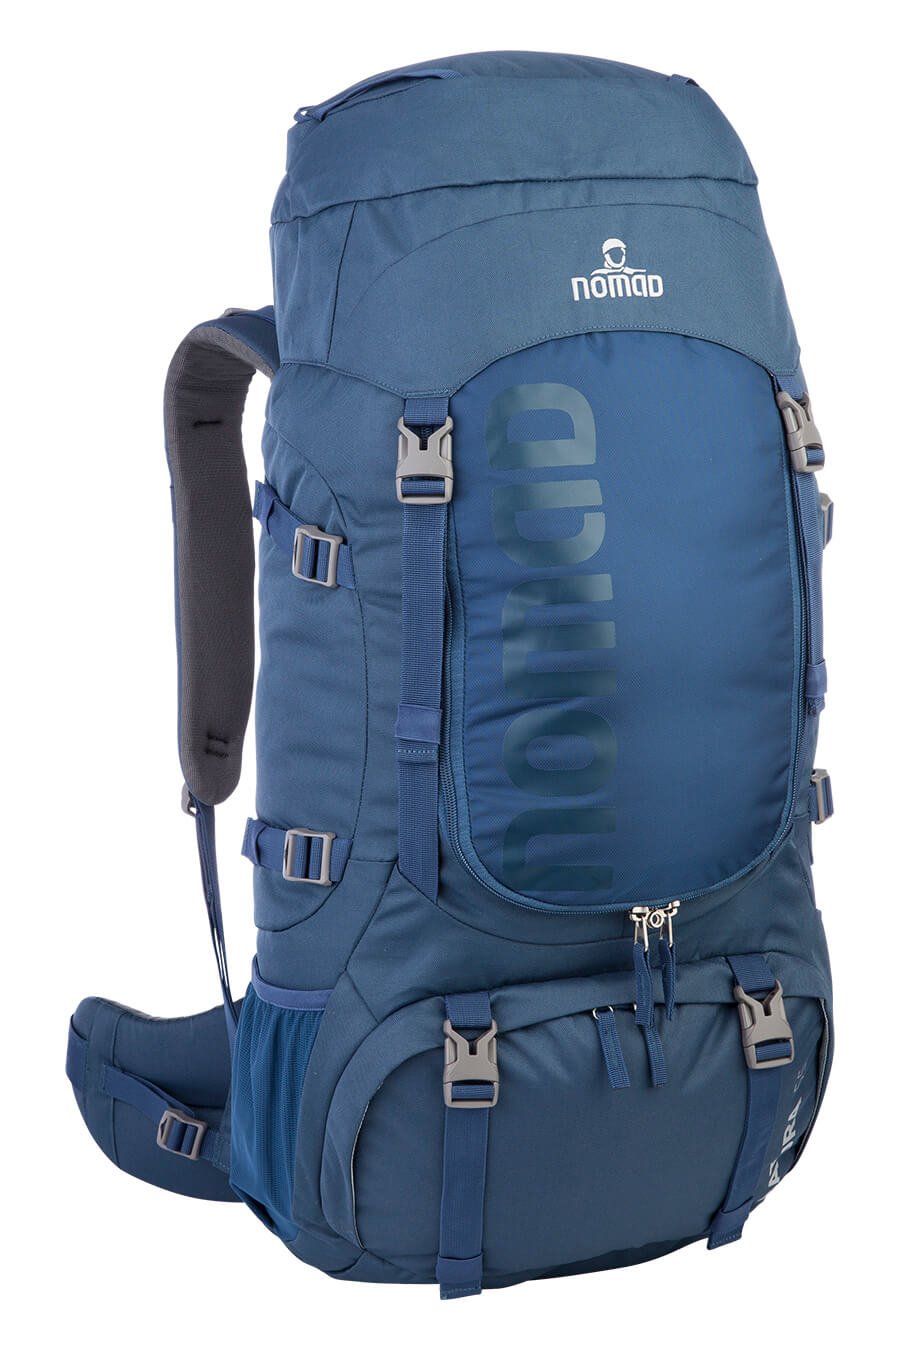 Nomad – Rugzakken – Donkerblauw – 63 x 23 x 5 cm